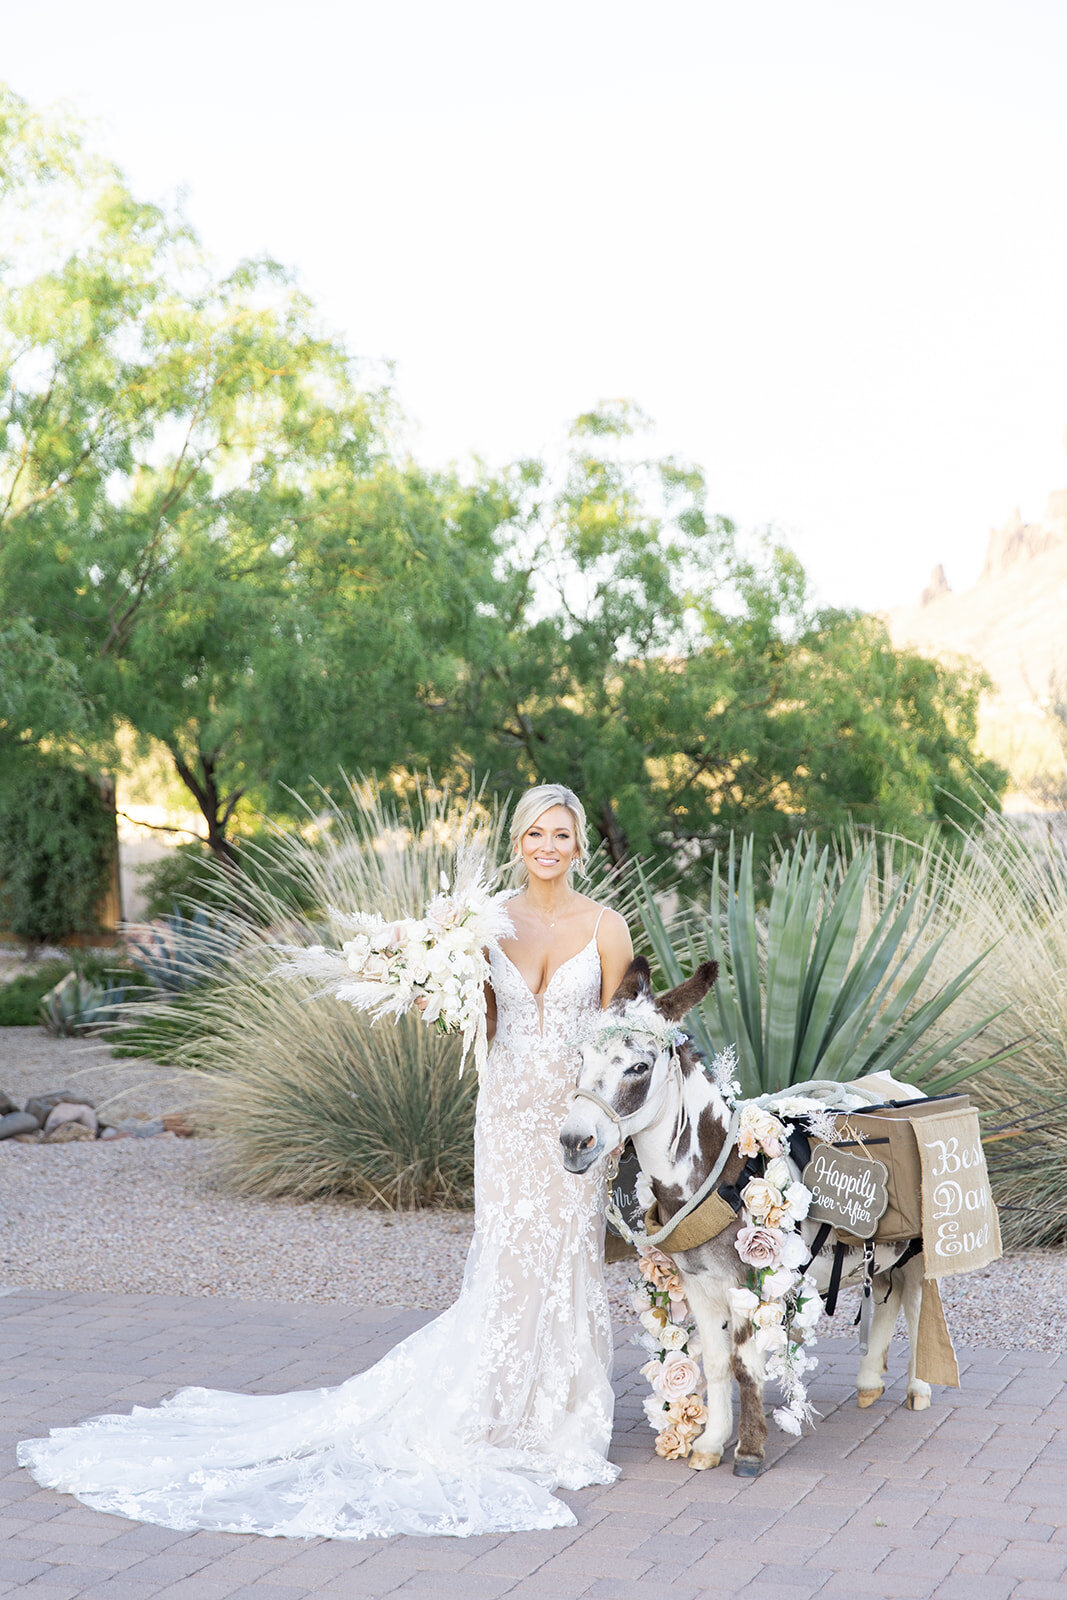 Karlie Colleen Photography - Ashley & Grant Wedding - The Paseo - Phoenix Arizona-736